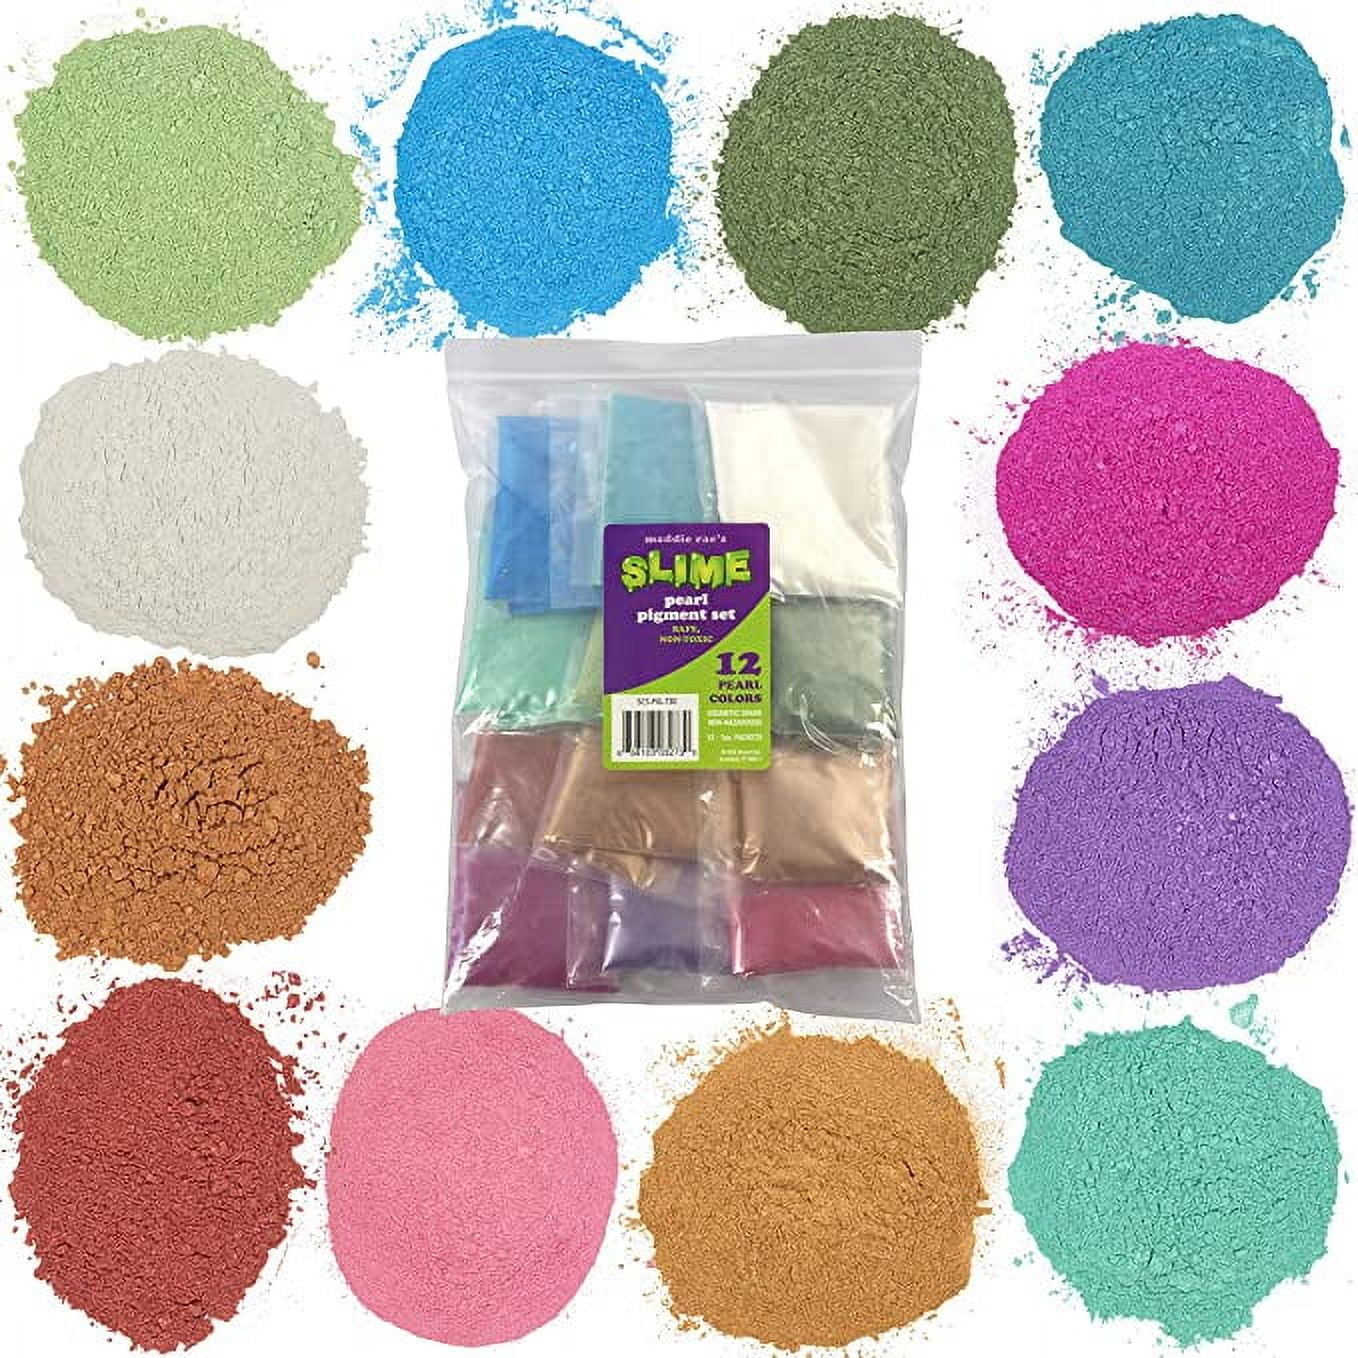 12 Colors Mica Powder Pigments Soap Dye for Soap Coloring - Soap